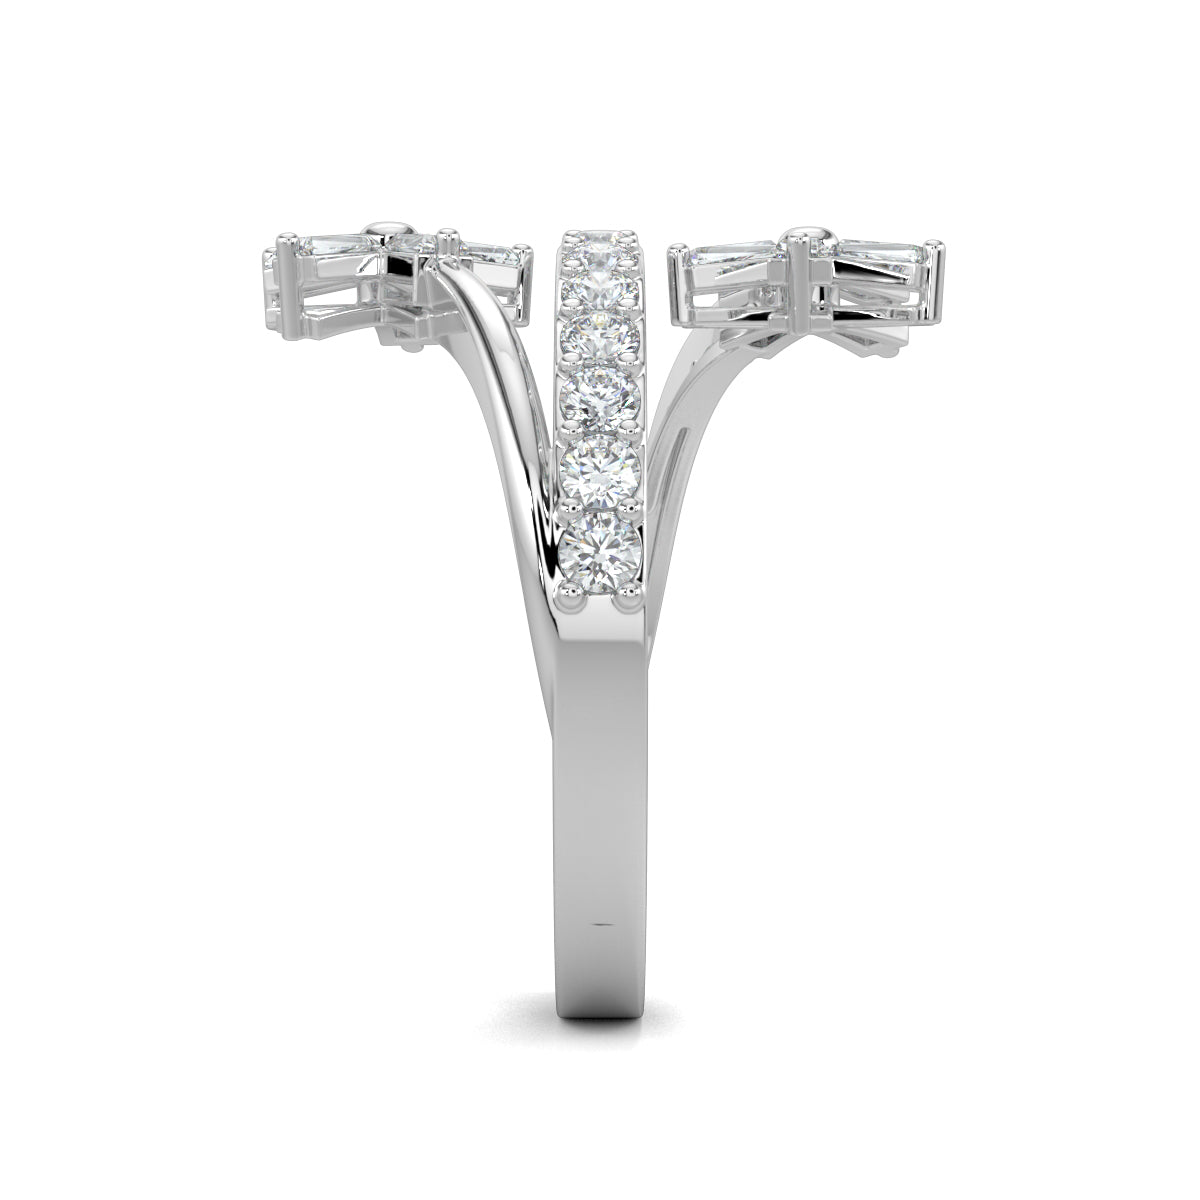 White Gold, Diamond Ring, Natural diamond ring, Lab-grown diamond ring, split shank diamond ring, everyday diamond ring, floral diamond ring, baguette diamond ring, diamond jewelry, luxury ring